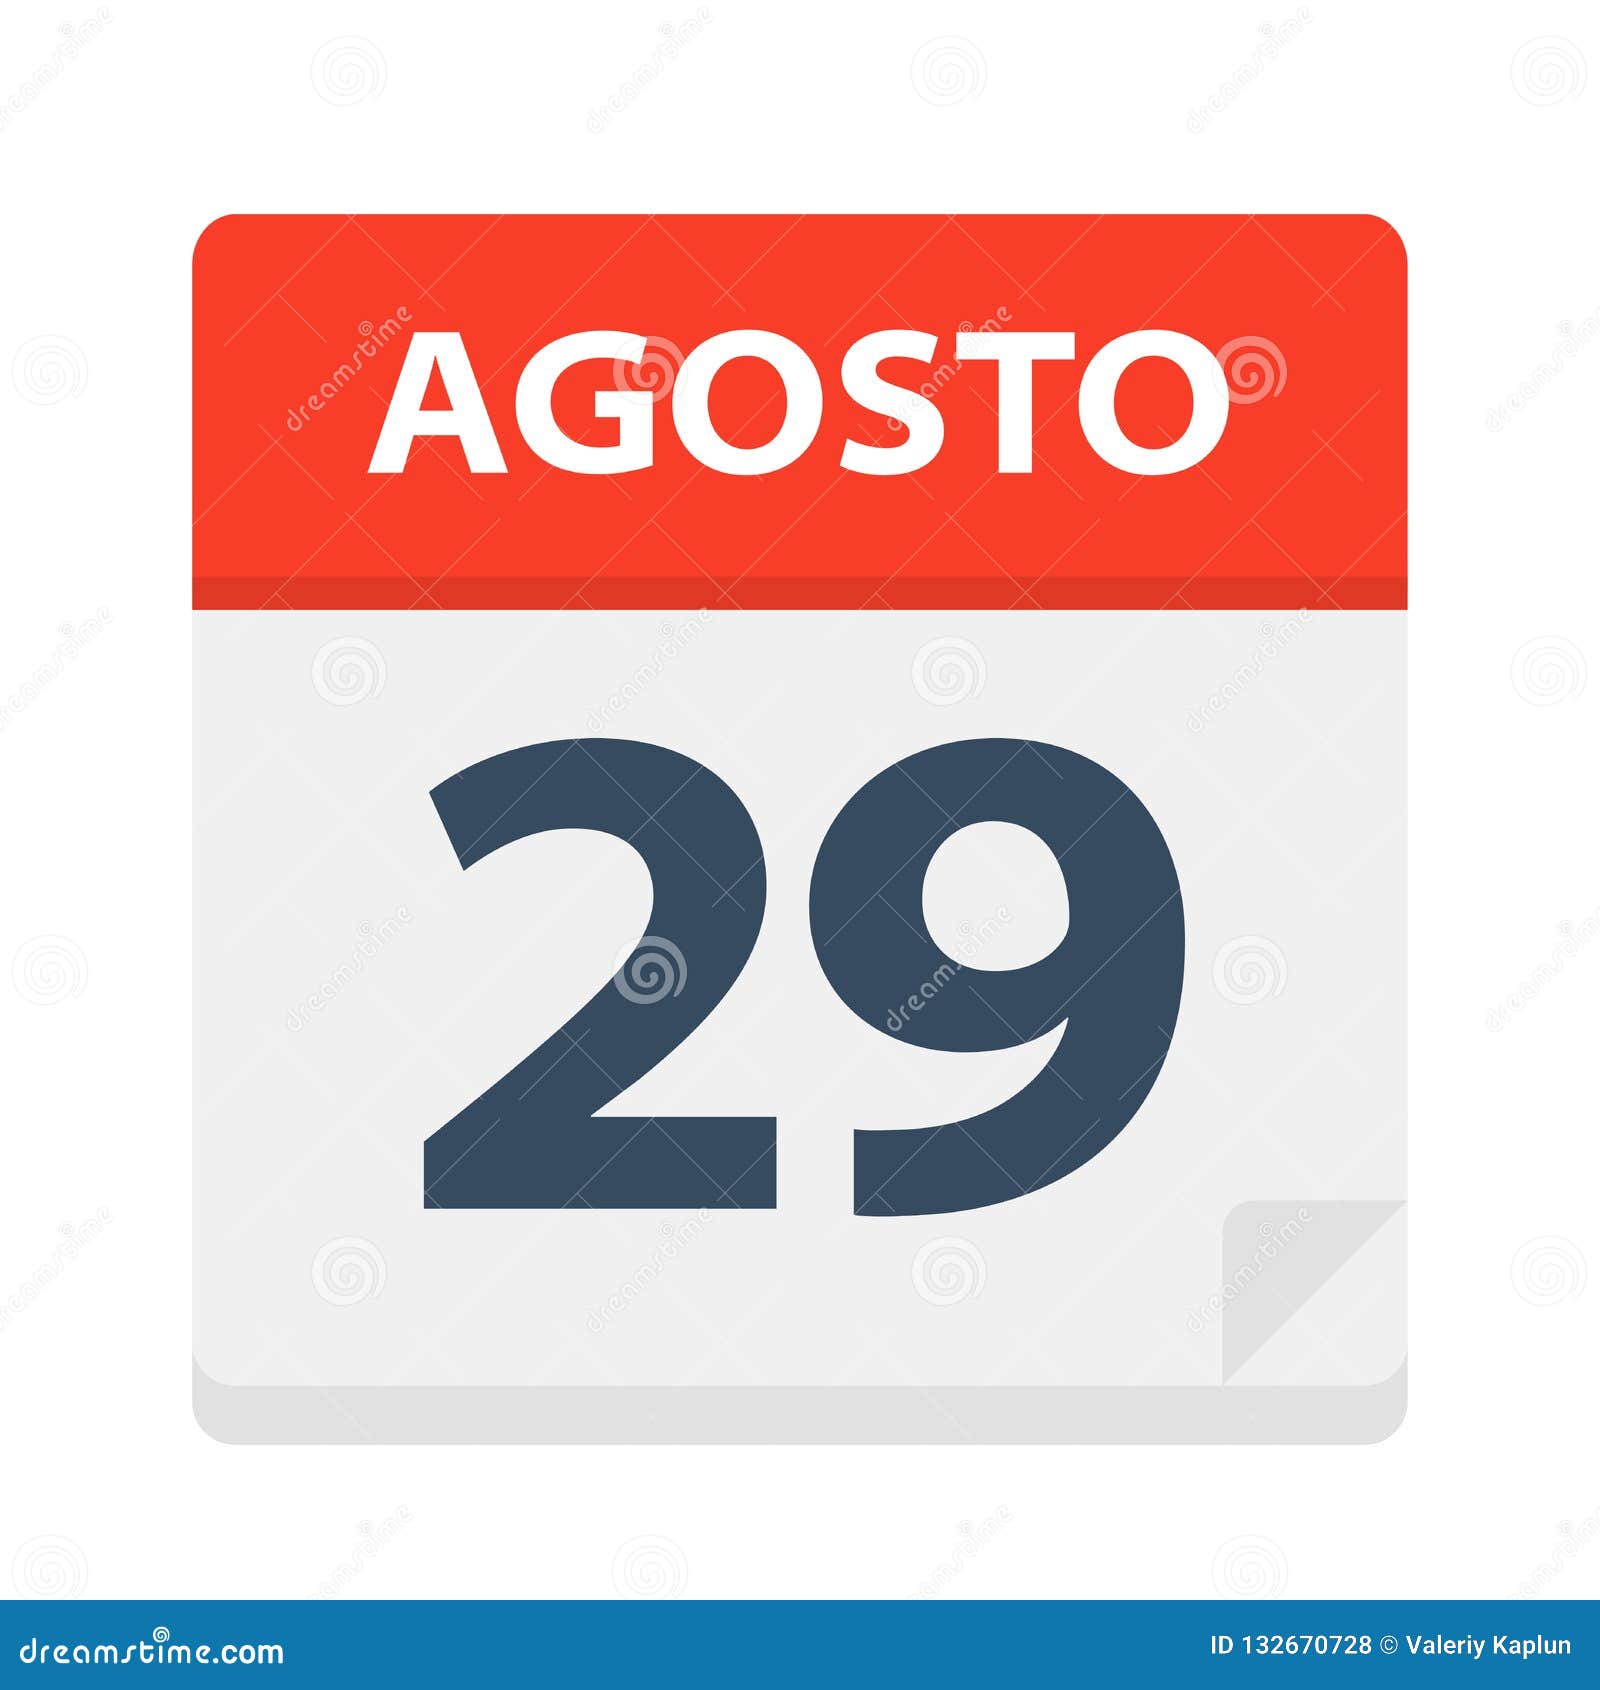 agosto 29 - calendar icon - august 29.   of spanish calendar leaf